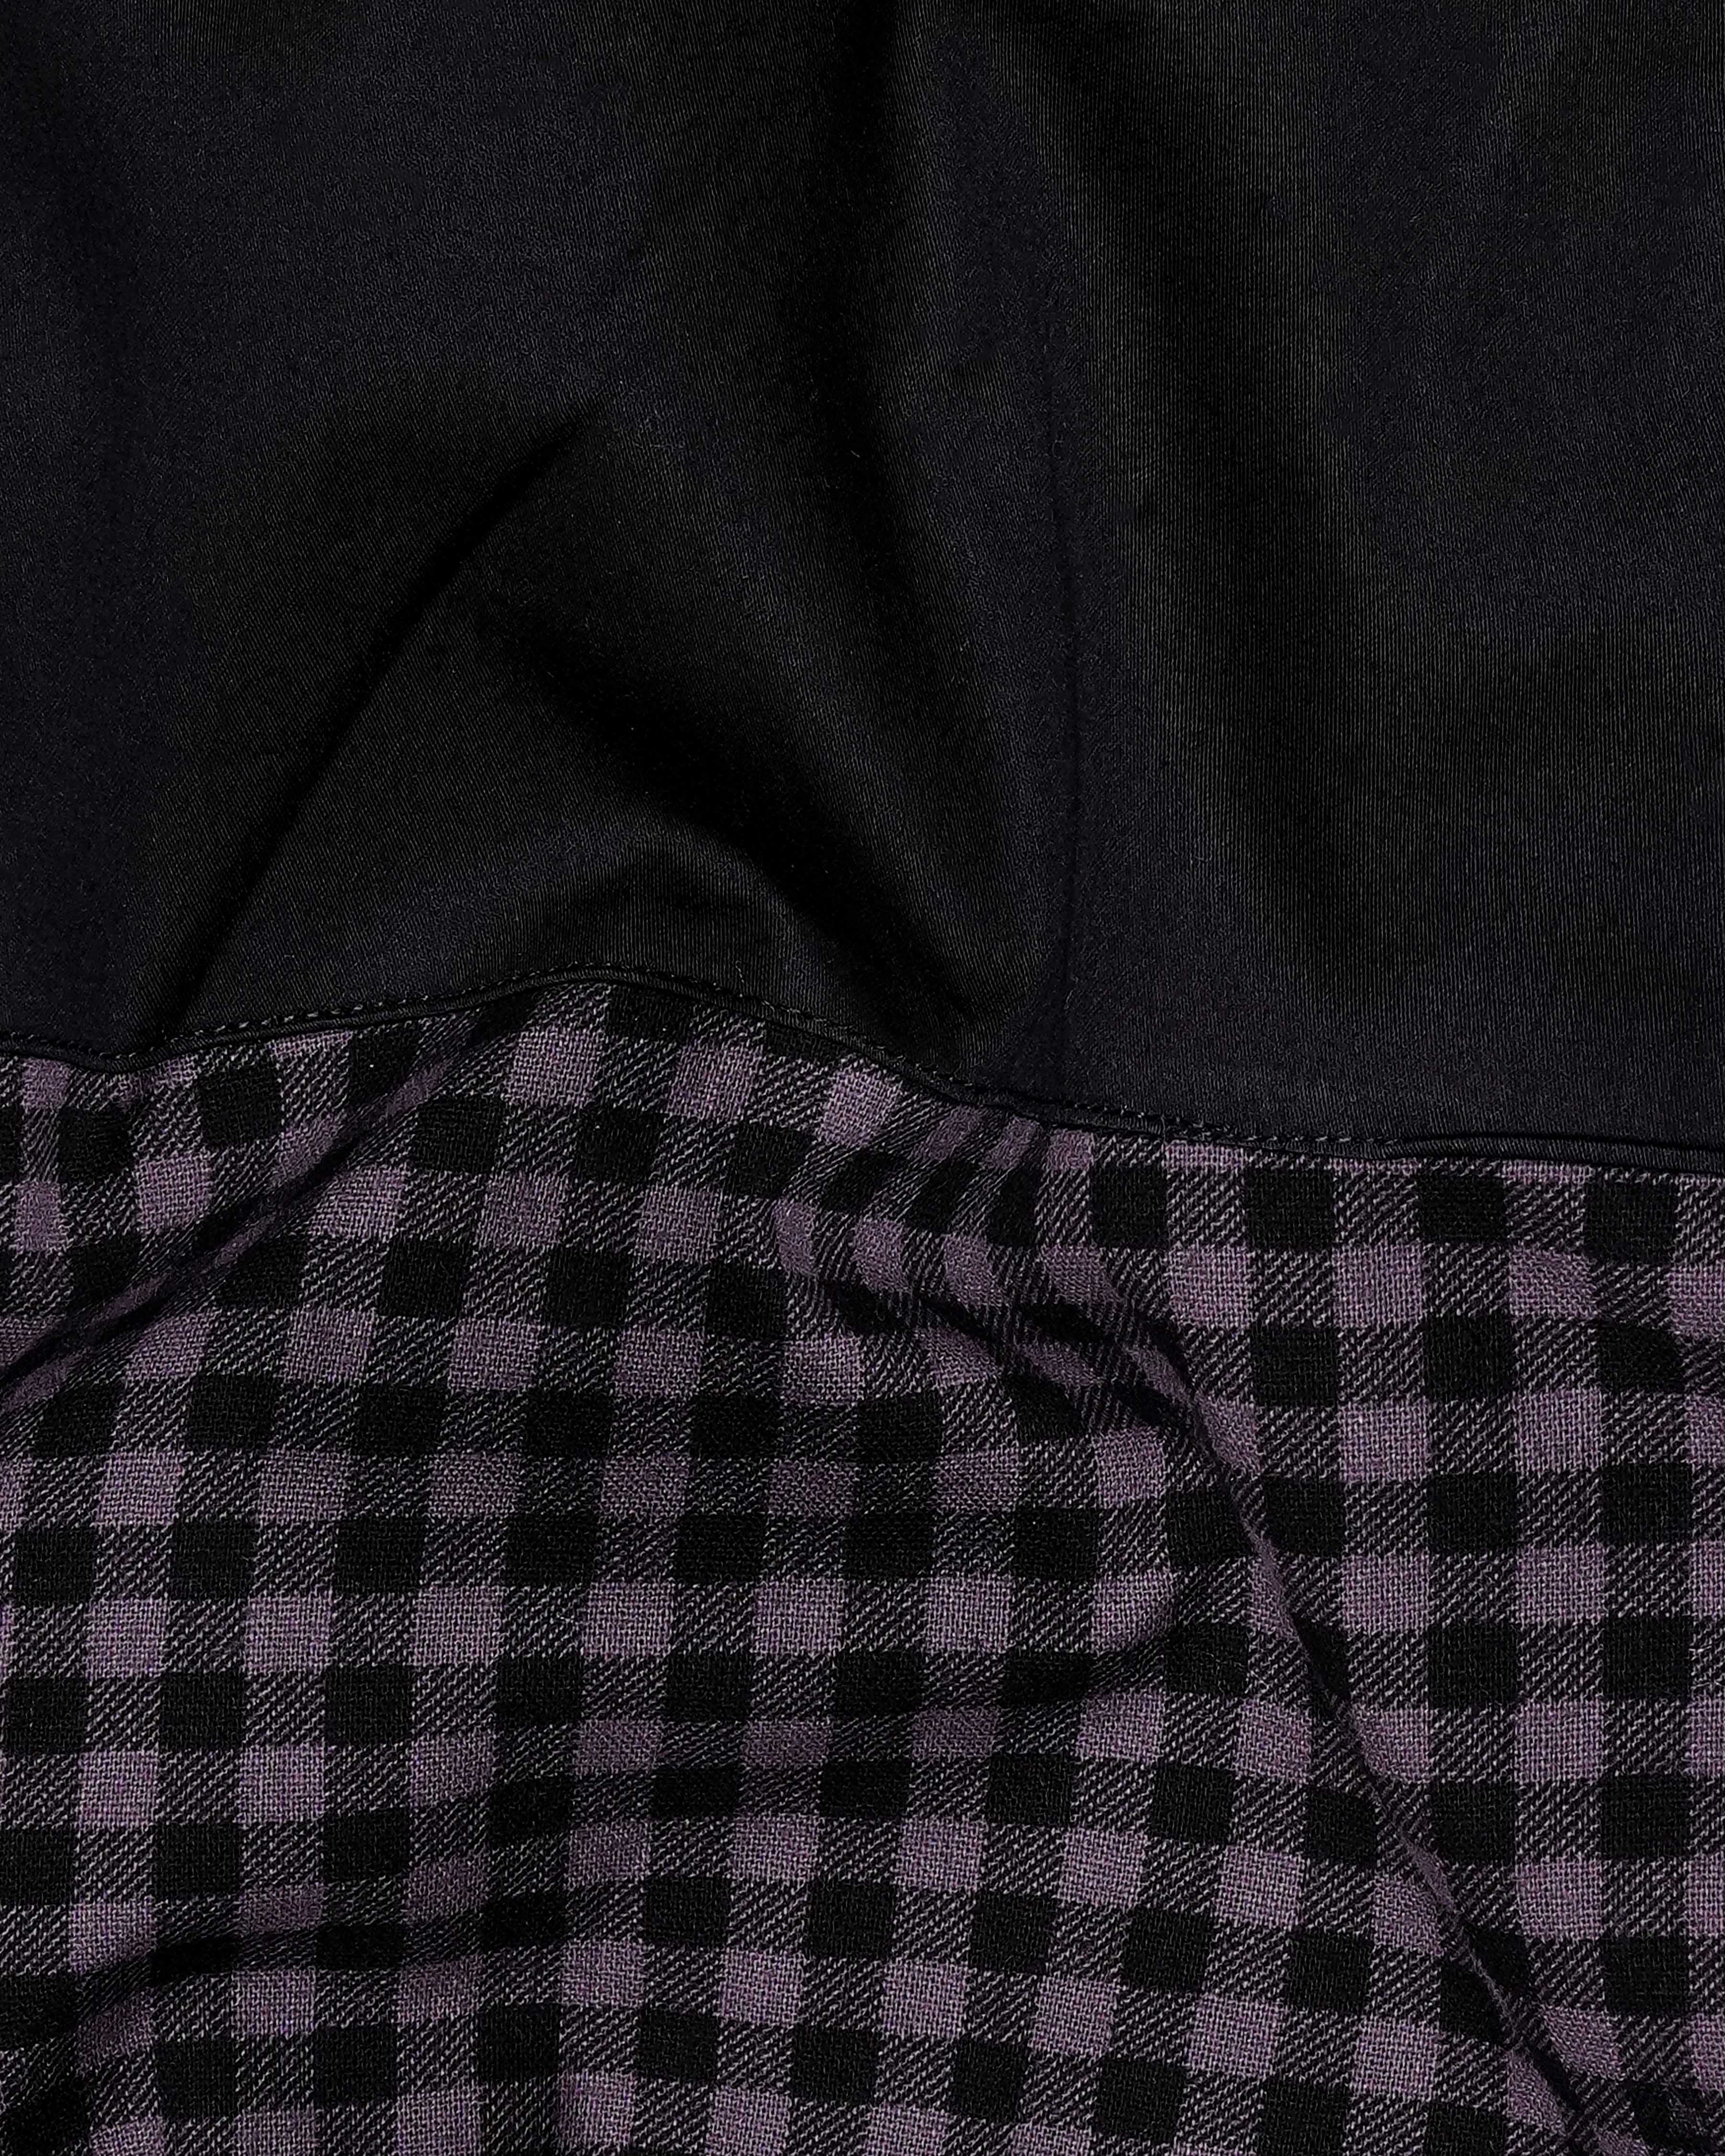 Jade Black with Scarpa Violet Gingham Super Soft Premium Cotton Designer Shirt 8339-BLK-P125-38, 8339-BLK-P125-H-38, 8339-BLK-P125-39, 8339-BLK-P125-H-39, 8339-BLK-P125-40, 8339-BLK-P125-H-40, 8339-BLK-P125-42, 8339-BLK-P125-H-42, 8339-BLK-P125-44, 8339-BLK-P125-H-44, 8339-BLK-P125-46, 8339-BLK-P125-H-46, 8339-BLK-P125-48, 8339-BLK-P125-H-48, 8339-BLK-P125-50, 8339-BLK-P125-H-50, 8339-BLK-P125-52, 8339-BLK-P125-H-52